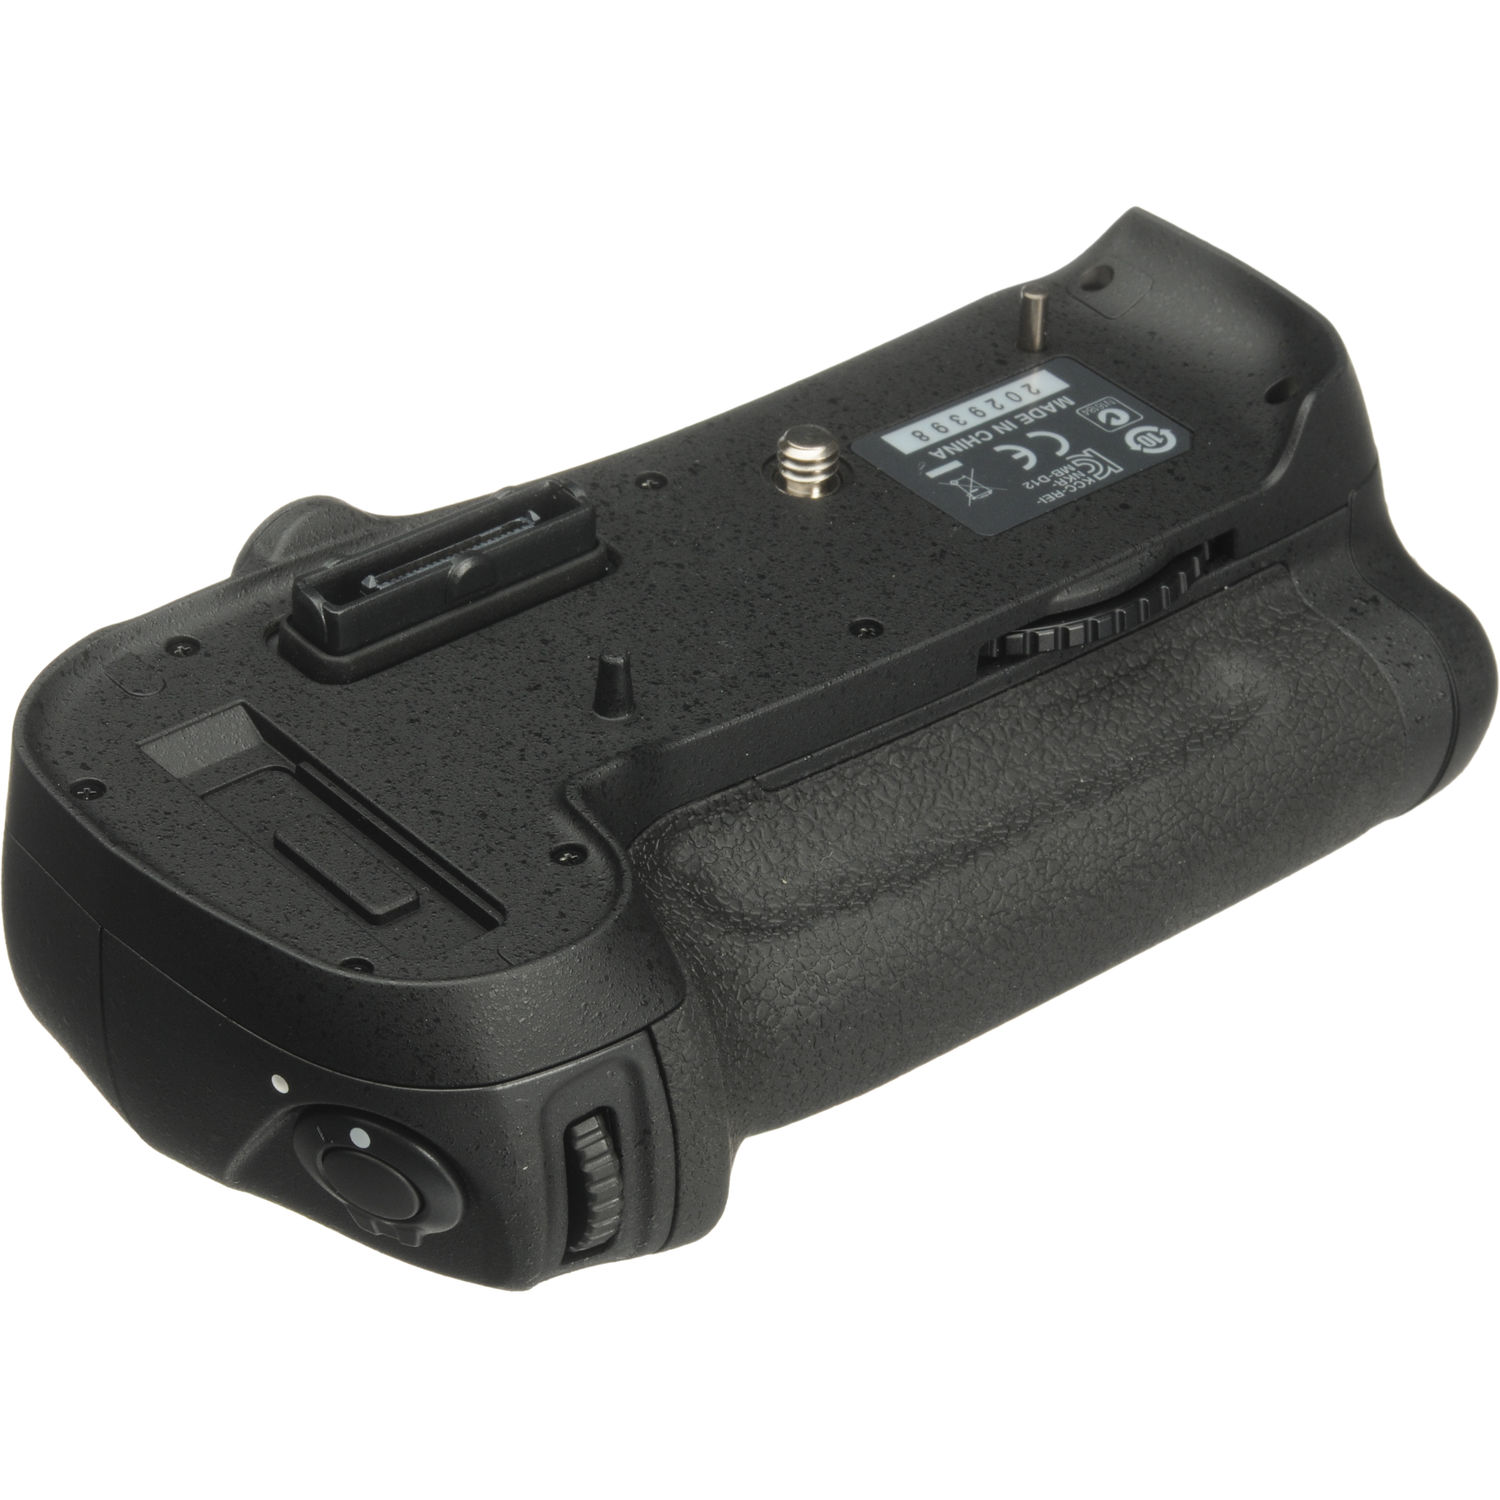 Nikon MB-D12 Multi Battery Power Pack Grip for D800 / D800E / D810